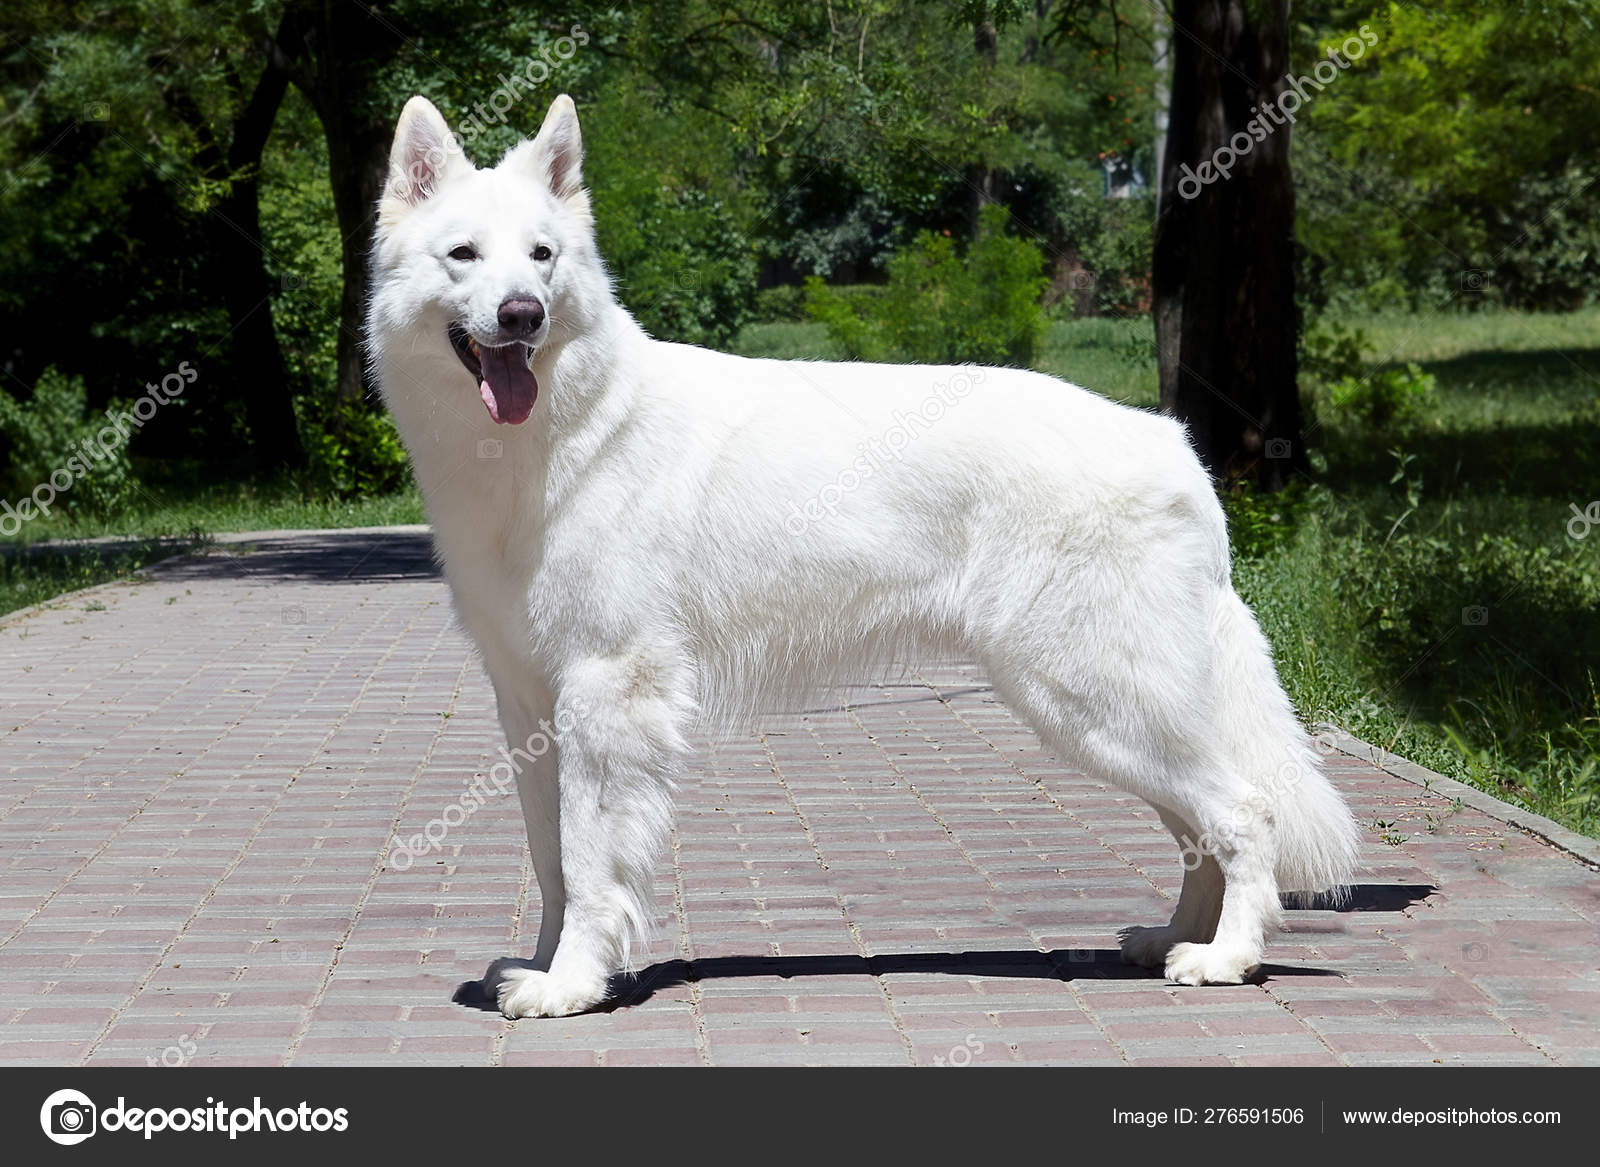 the big white dog